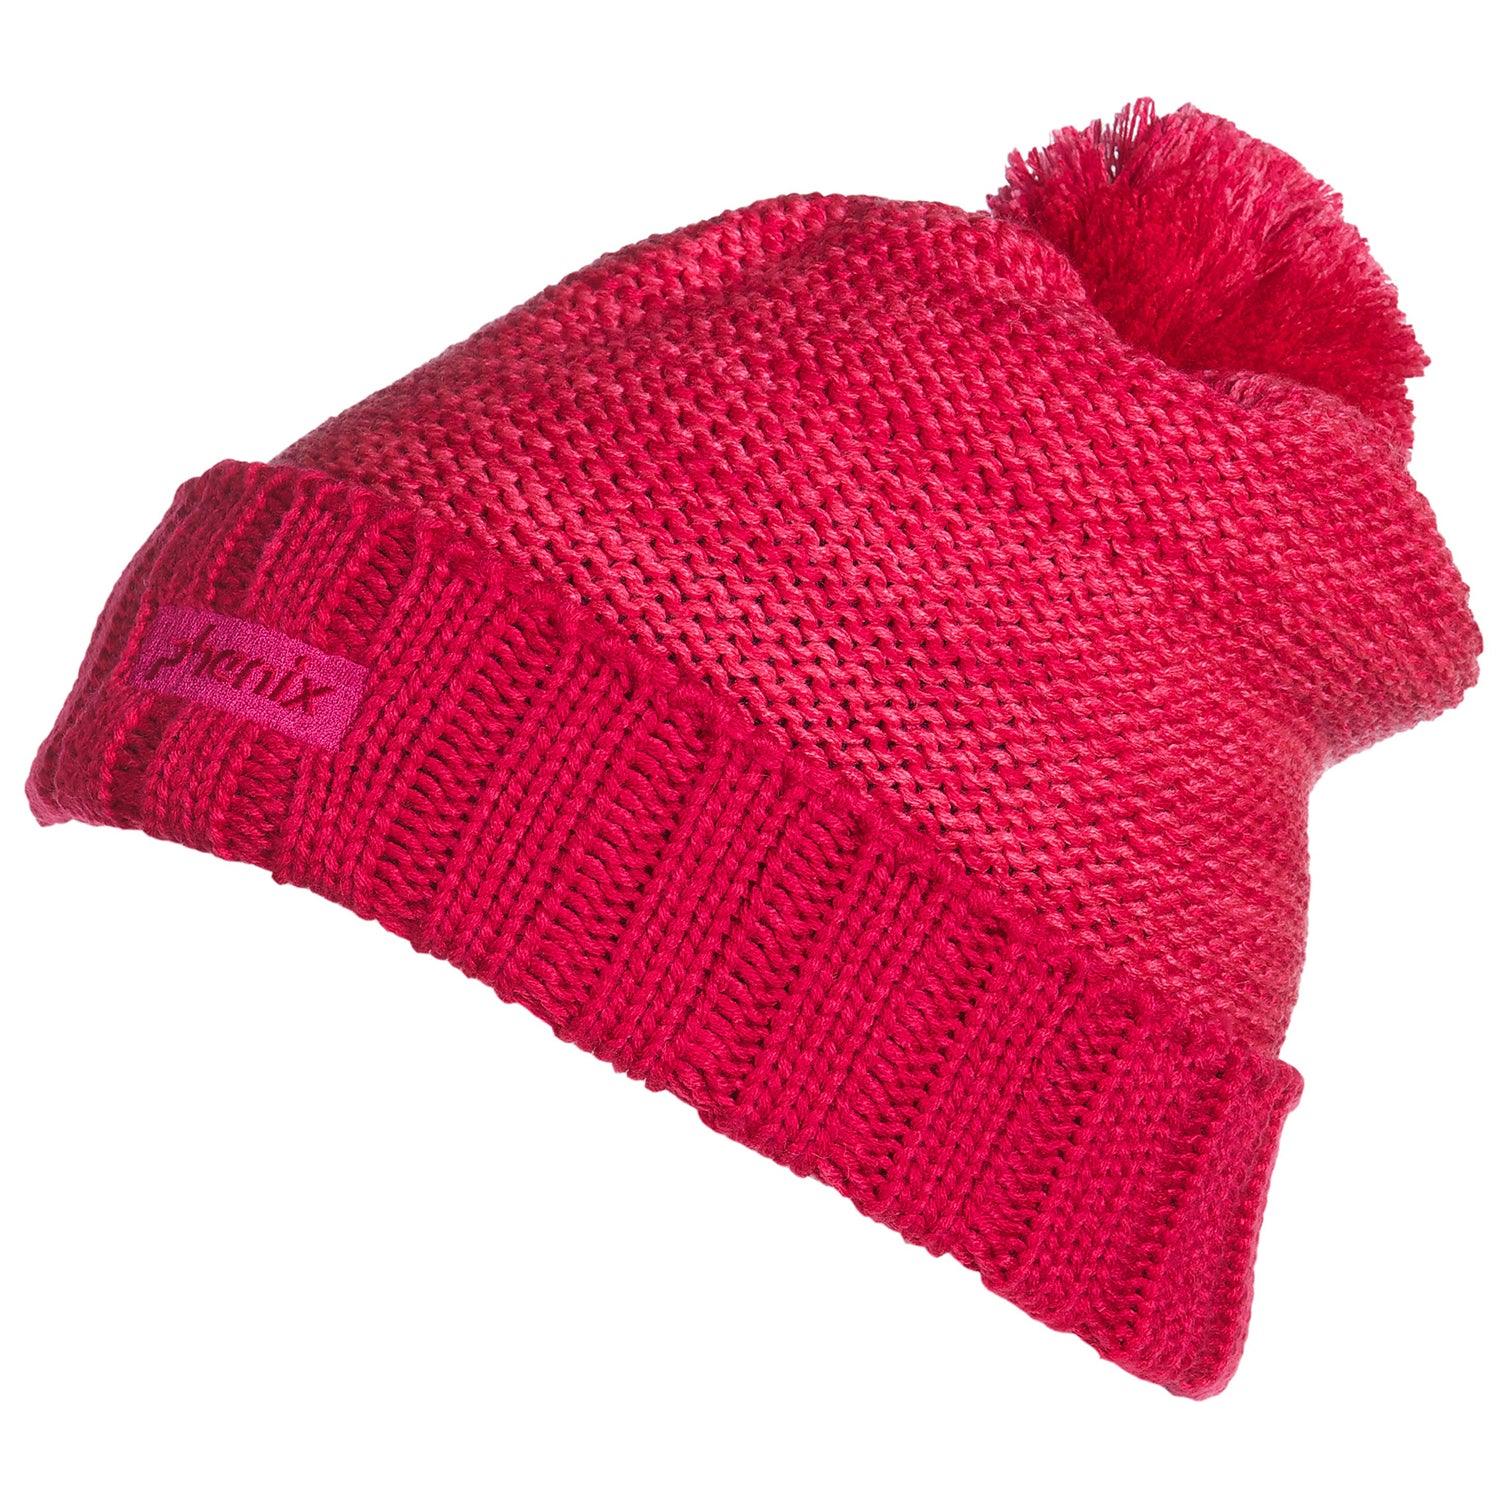 Phenix Groovy Jnr Knit Hat 2016 Pink